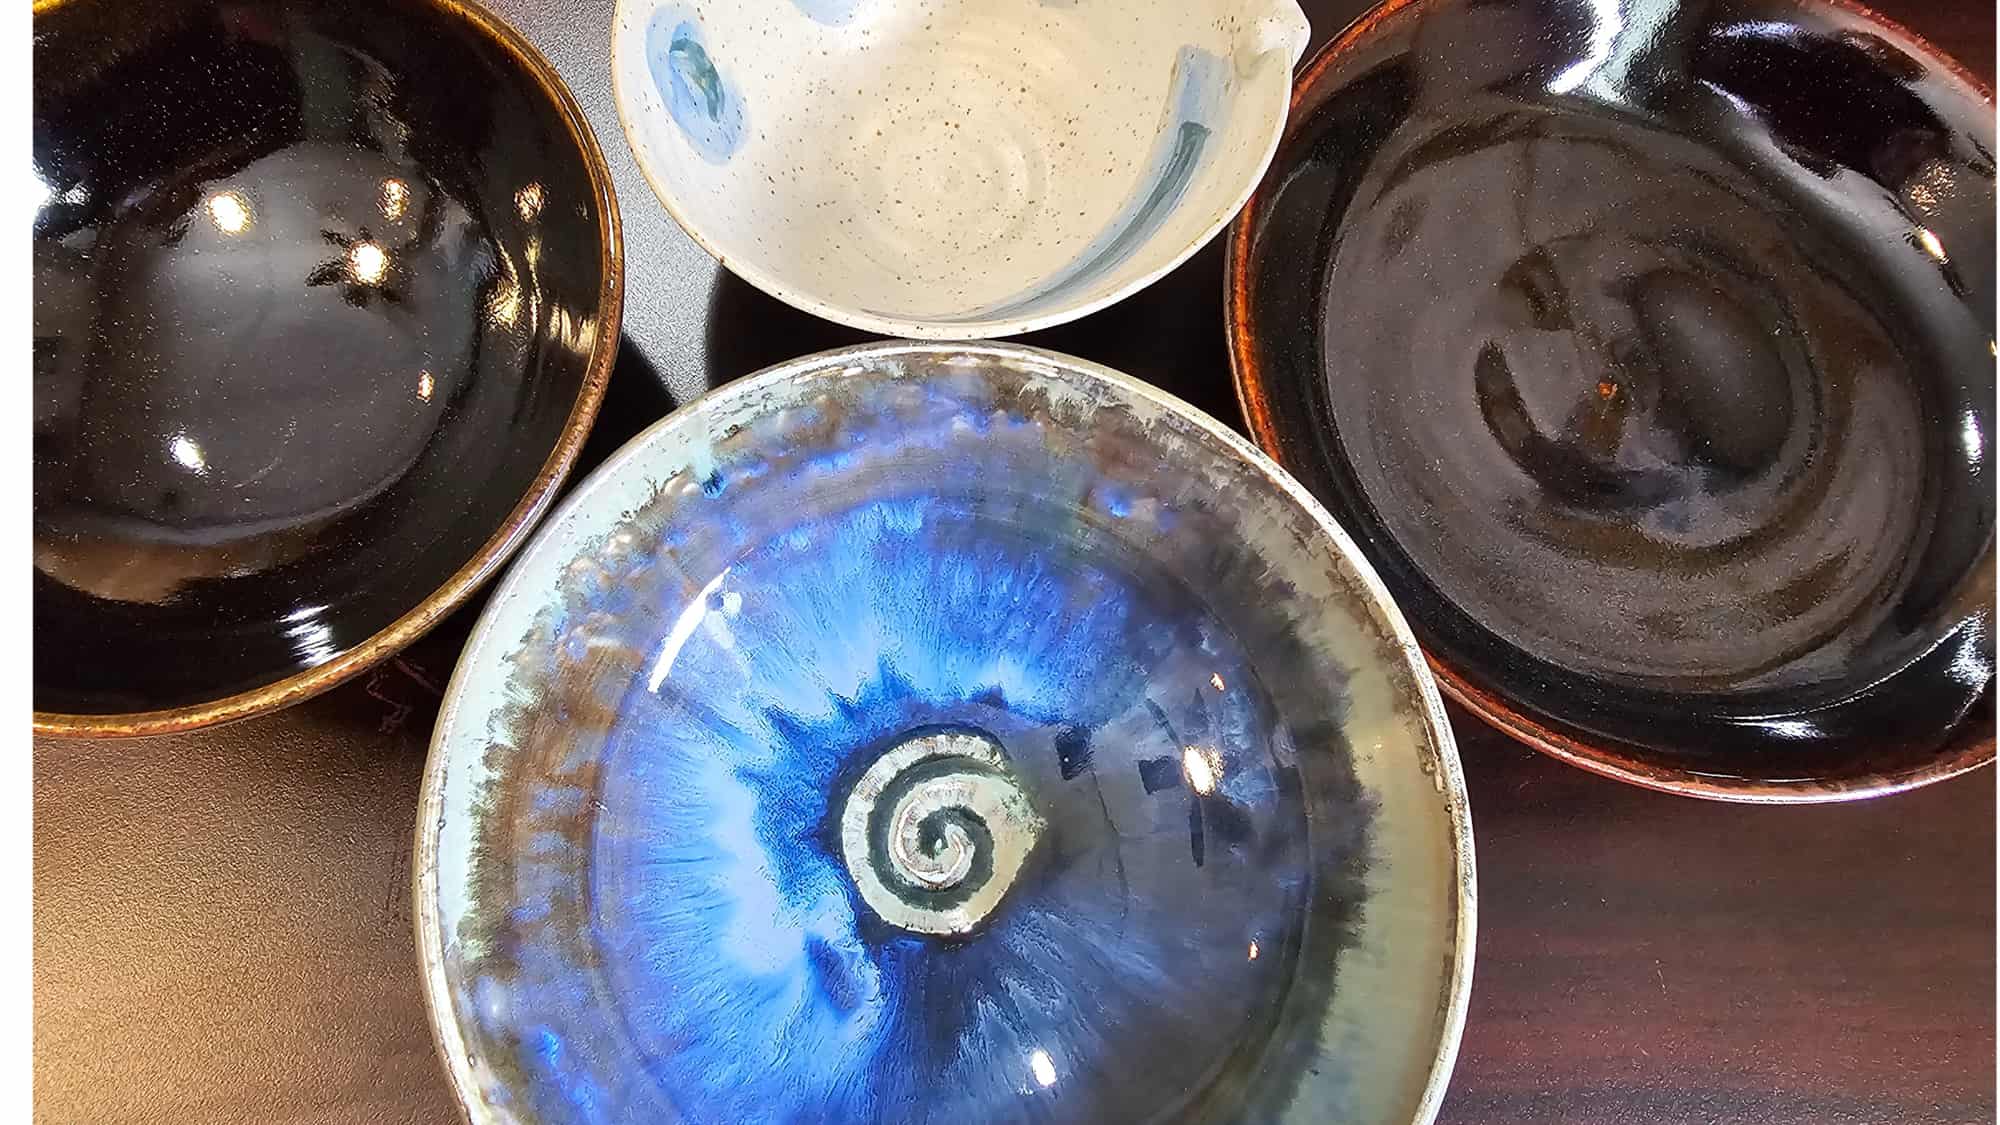 Empty Bowls